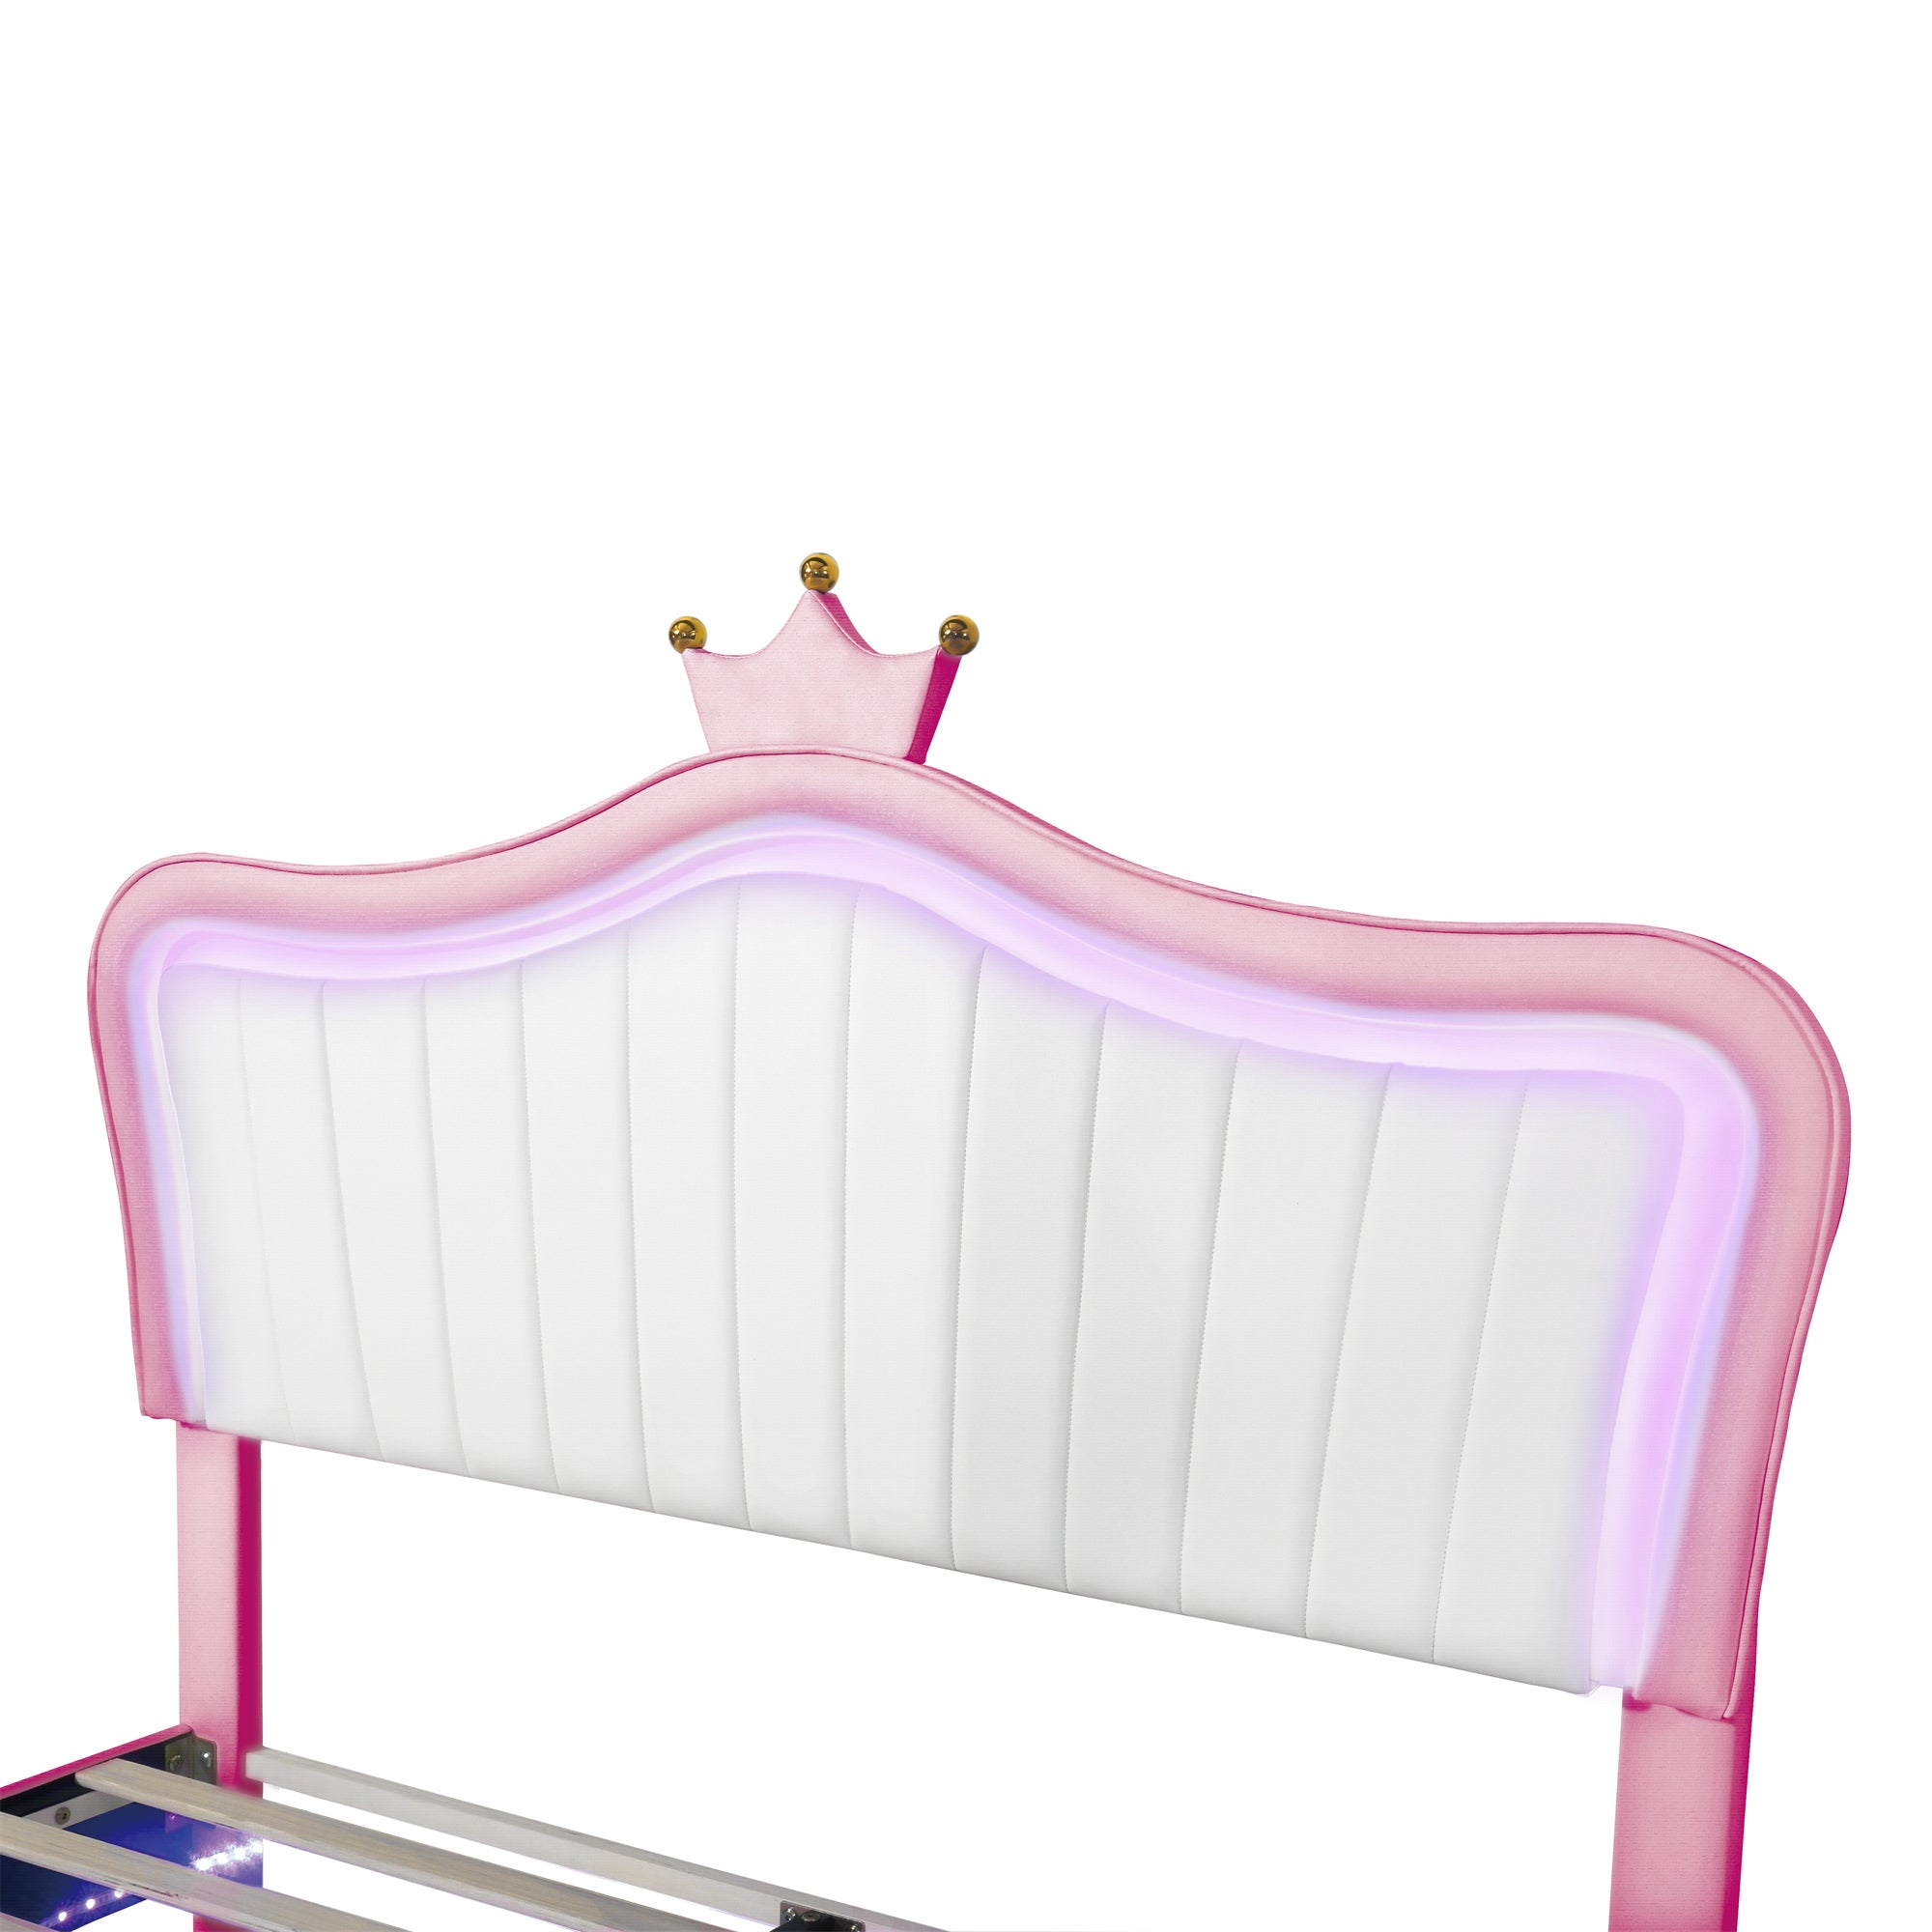 Sophia Queen Princess Platform Bed with LED Light